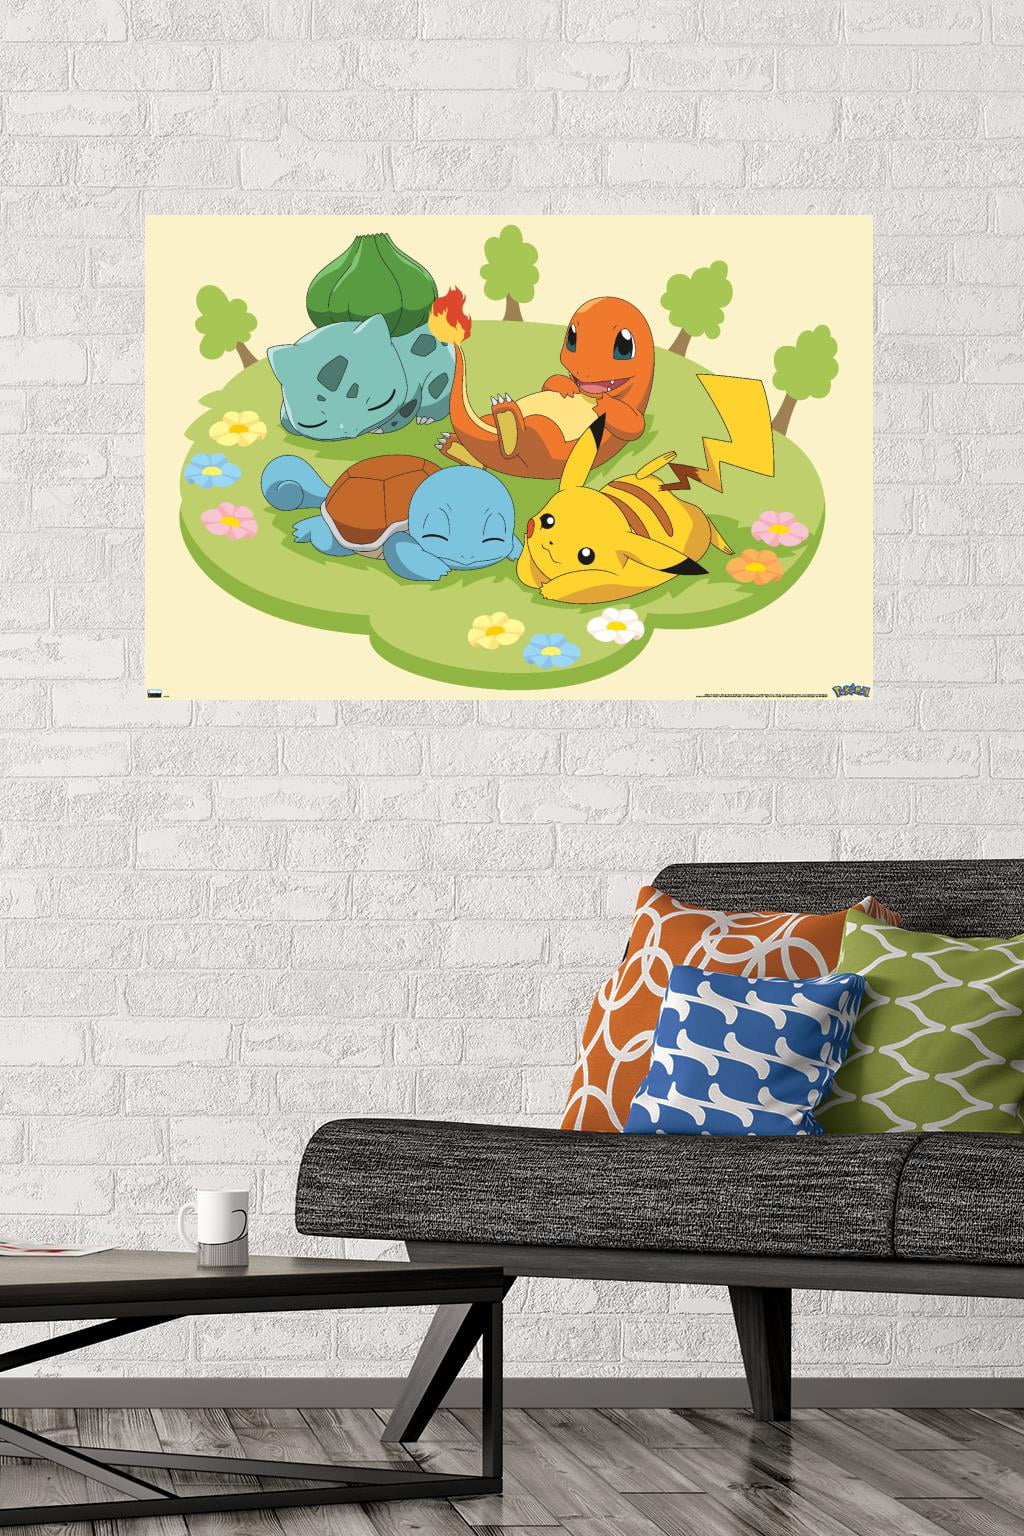 Pokémon - Pikachu and Kanto First Partner Pokémon Wall Poster, 22.375